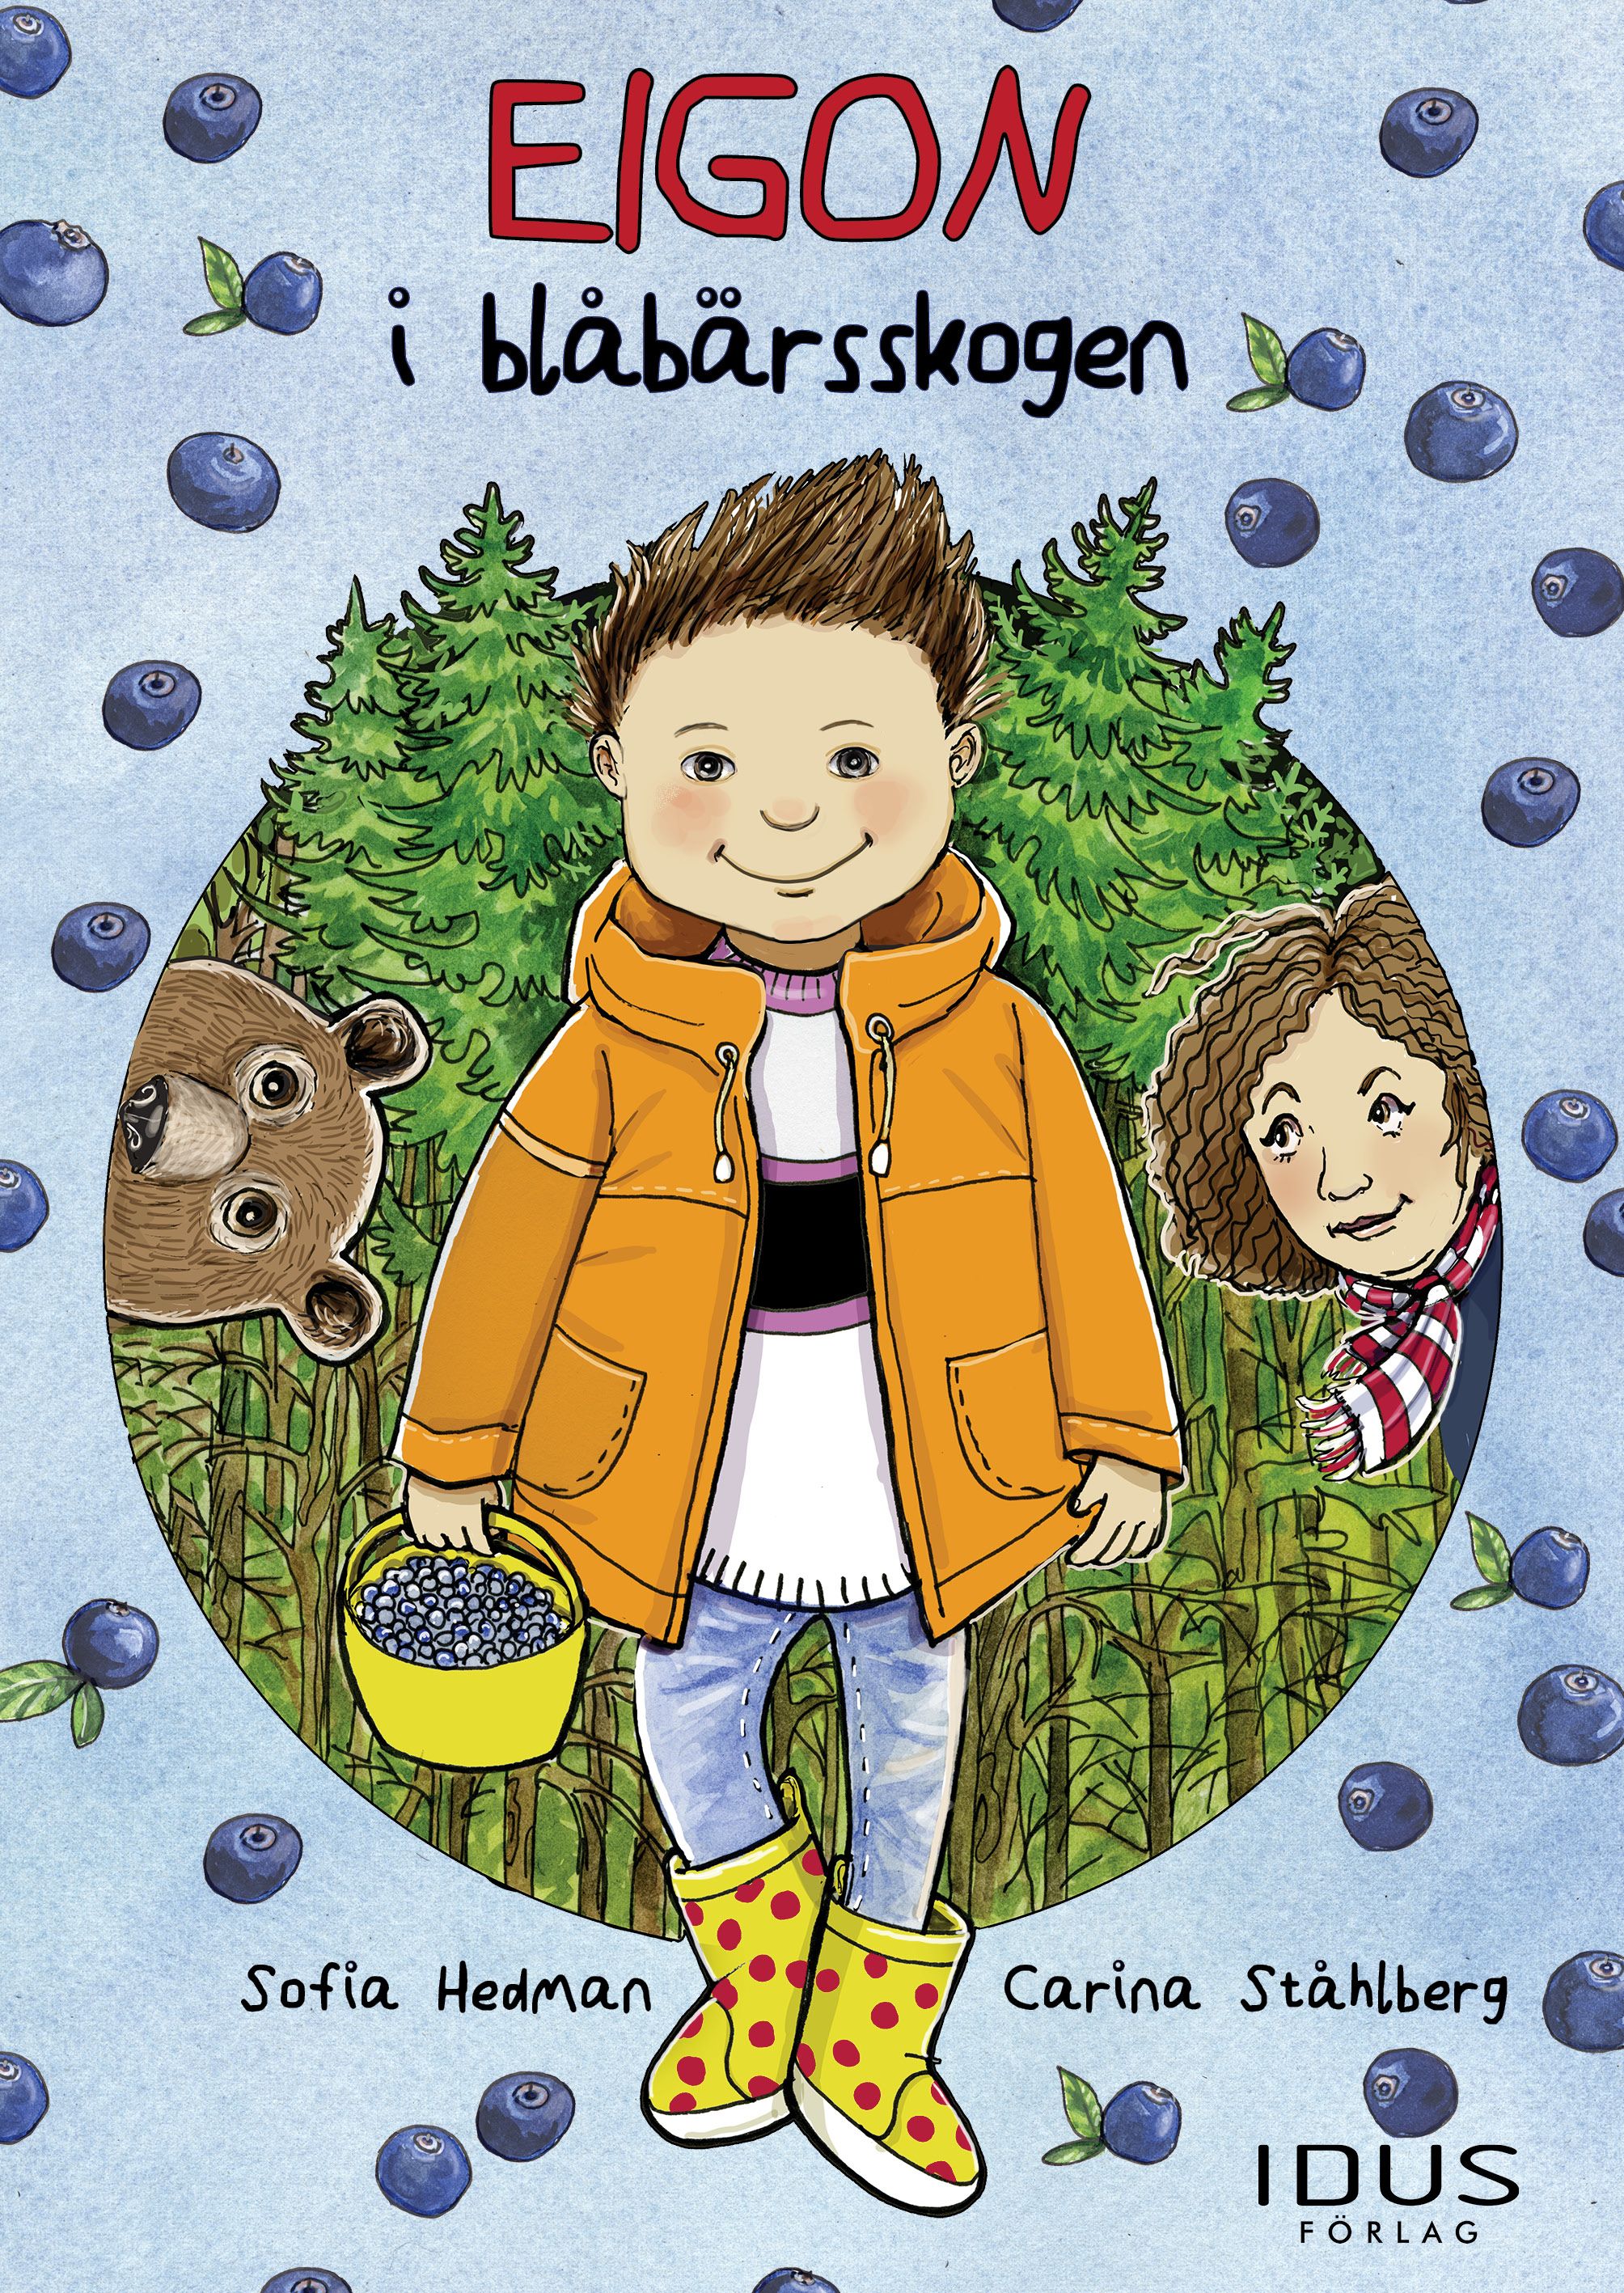 Eigon i blåbärsskogen, e-bog af Sofia Hedman